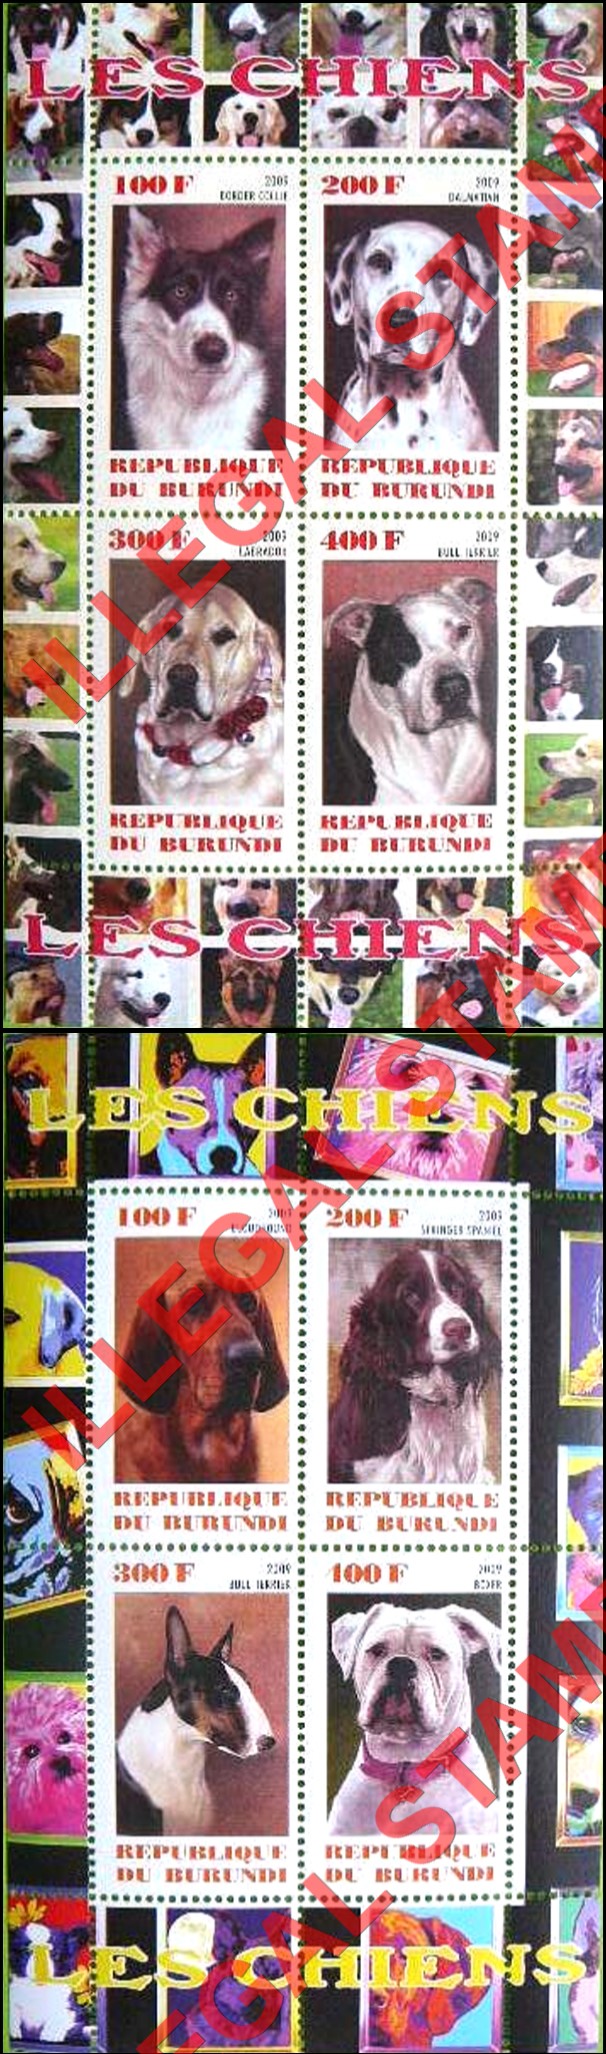 Burundi 2009 Dogs Counterfeit Illegal Stamp Souvenir Sheets of 4 (Part 2)